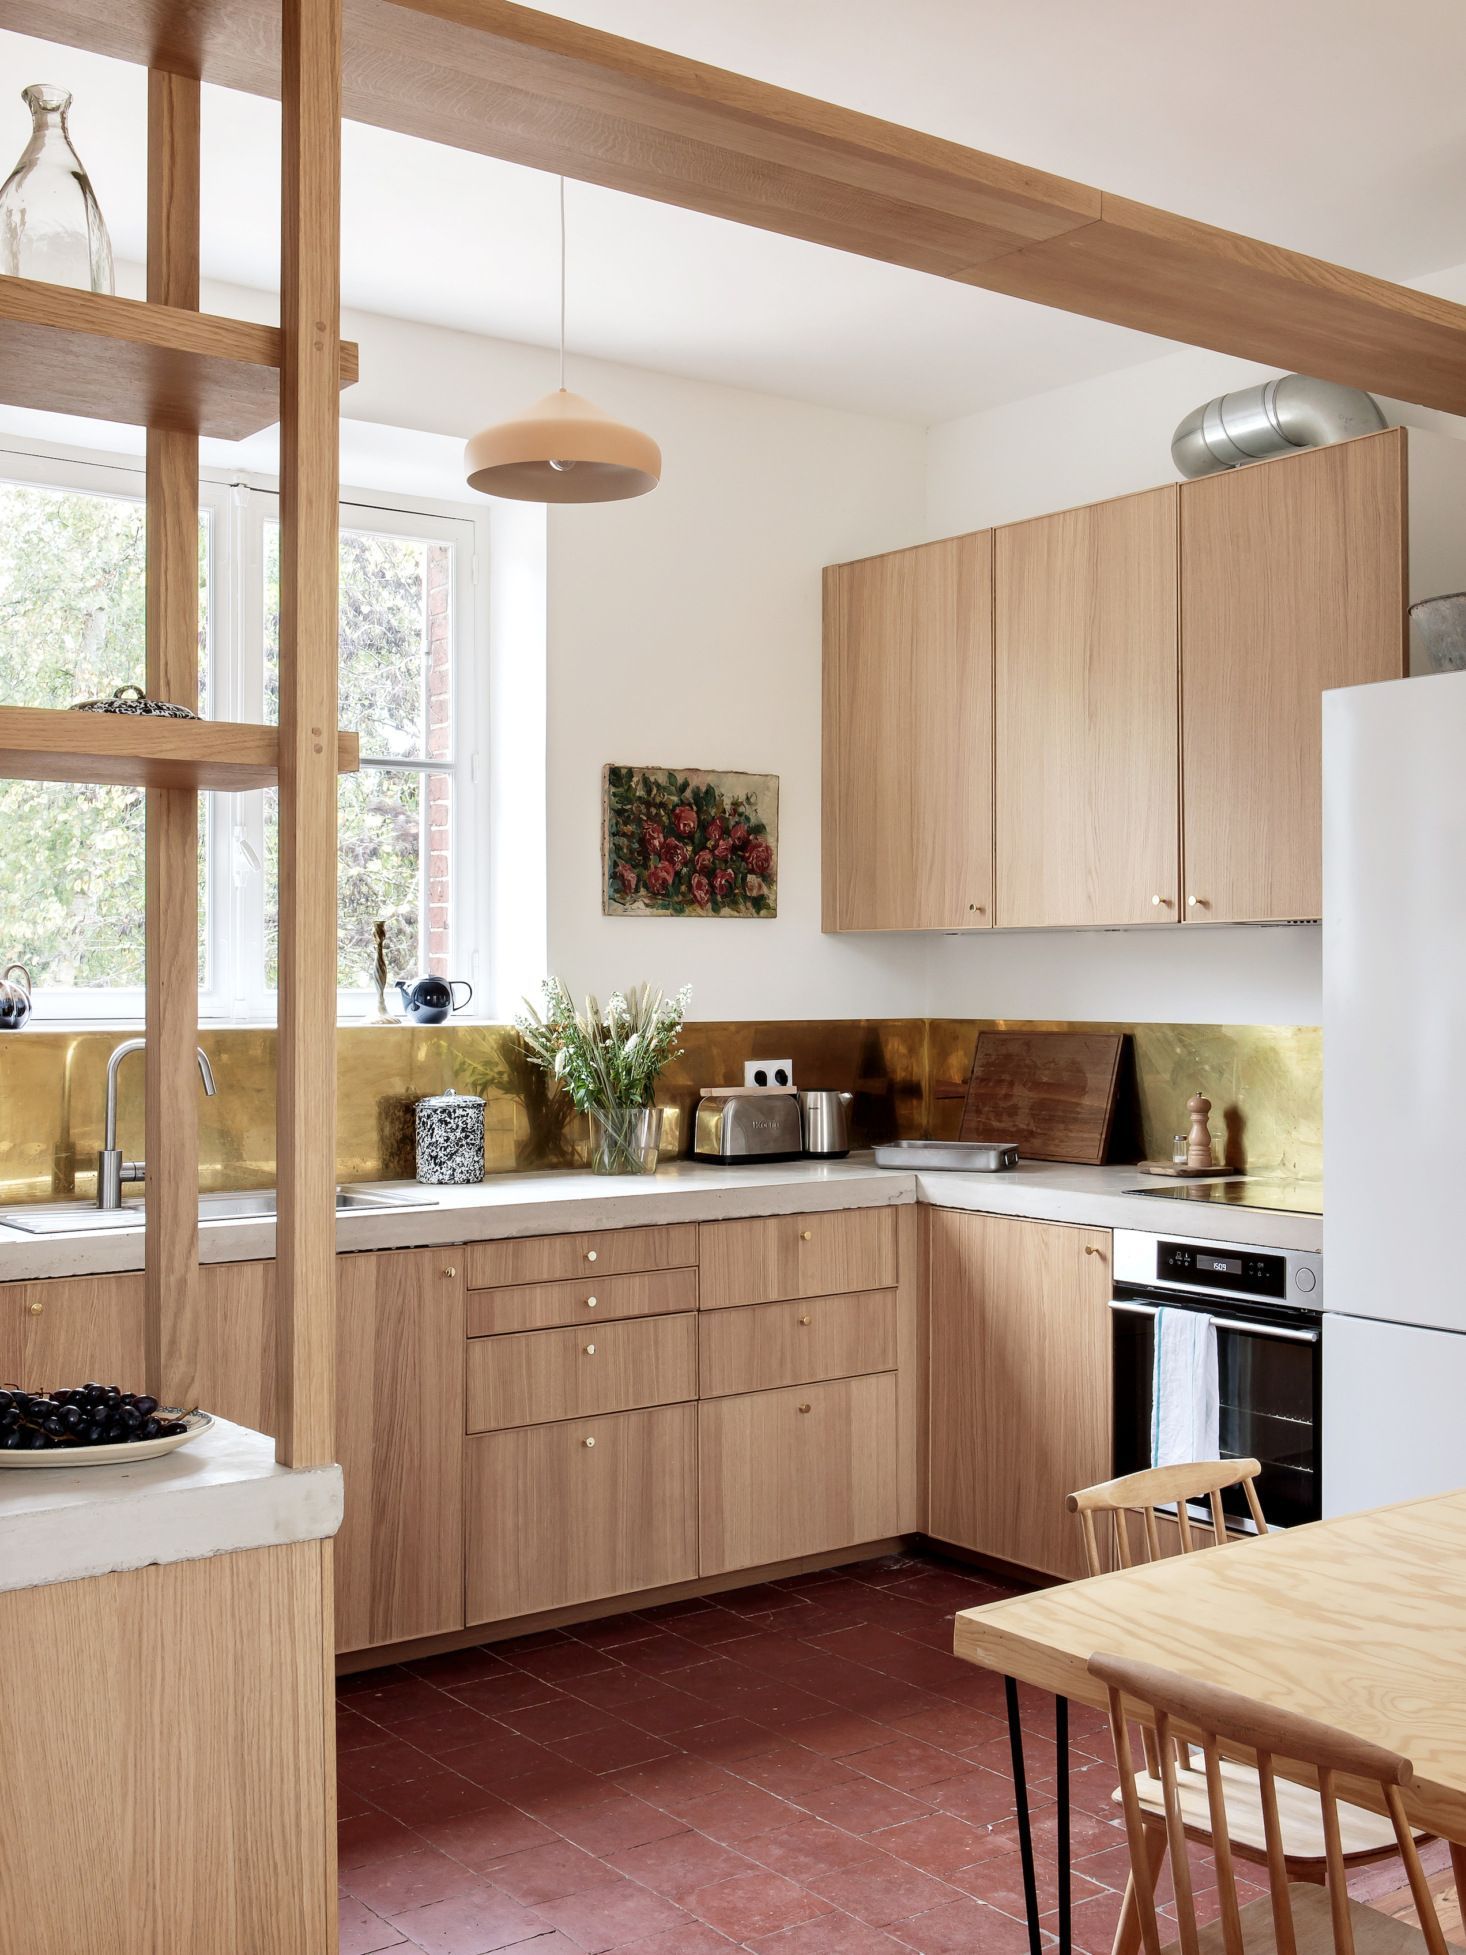 Ikea Kitchen Ideas The Most Beautiful, Curved Kitchen Cabinets Ikea